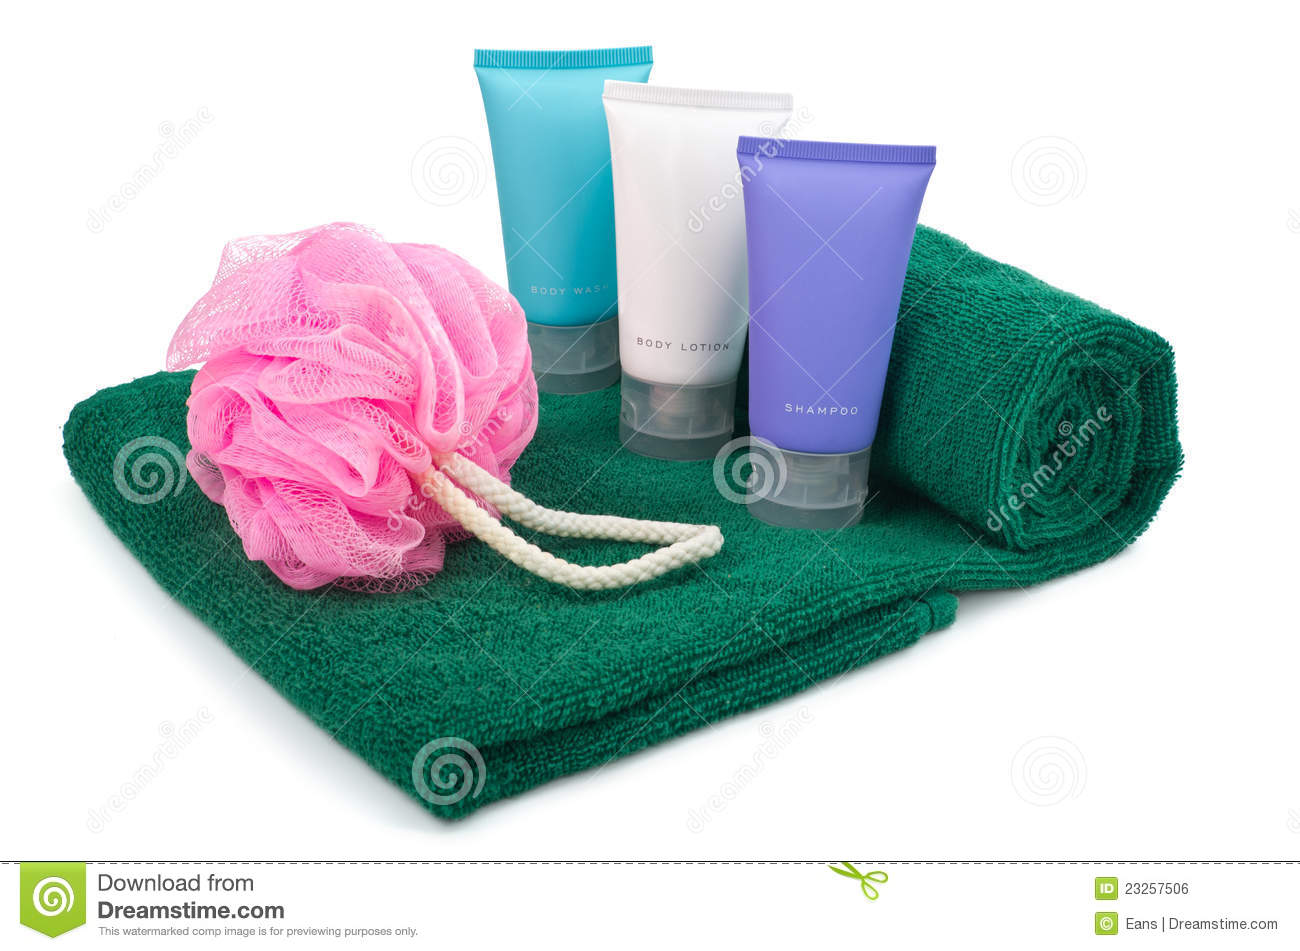 Toiletries On Towel Royalty Free Stock Image   Image  23257506